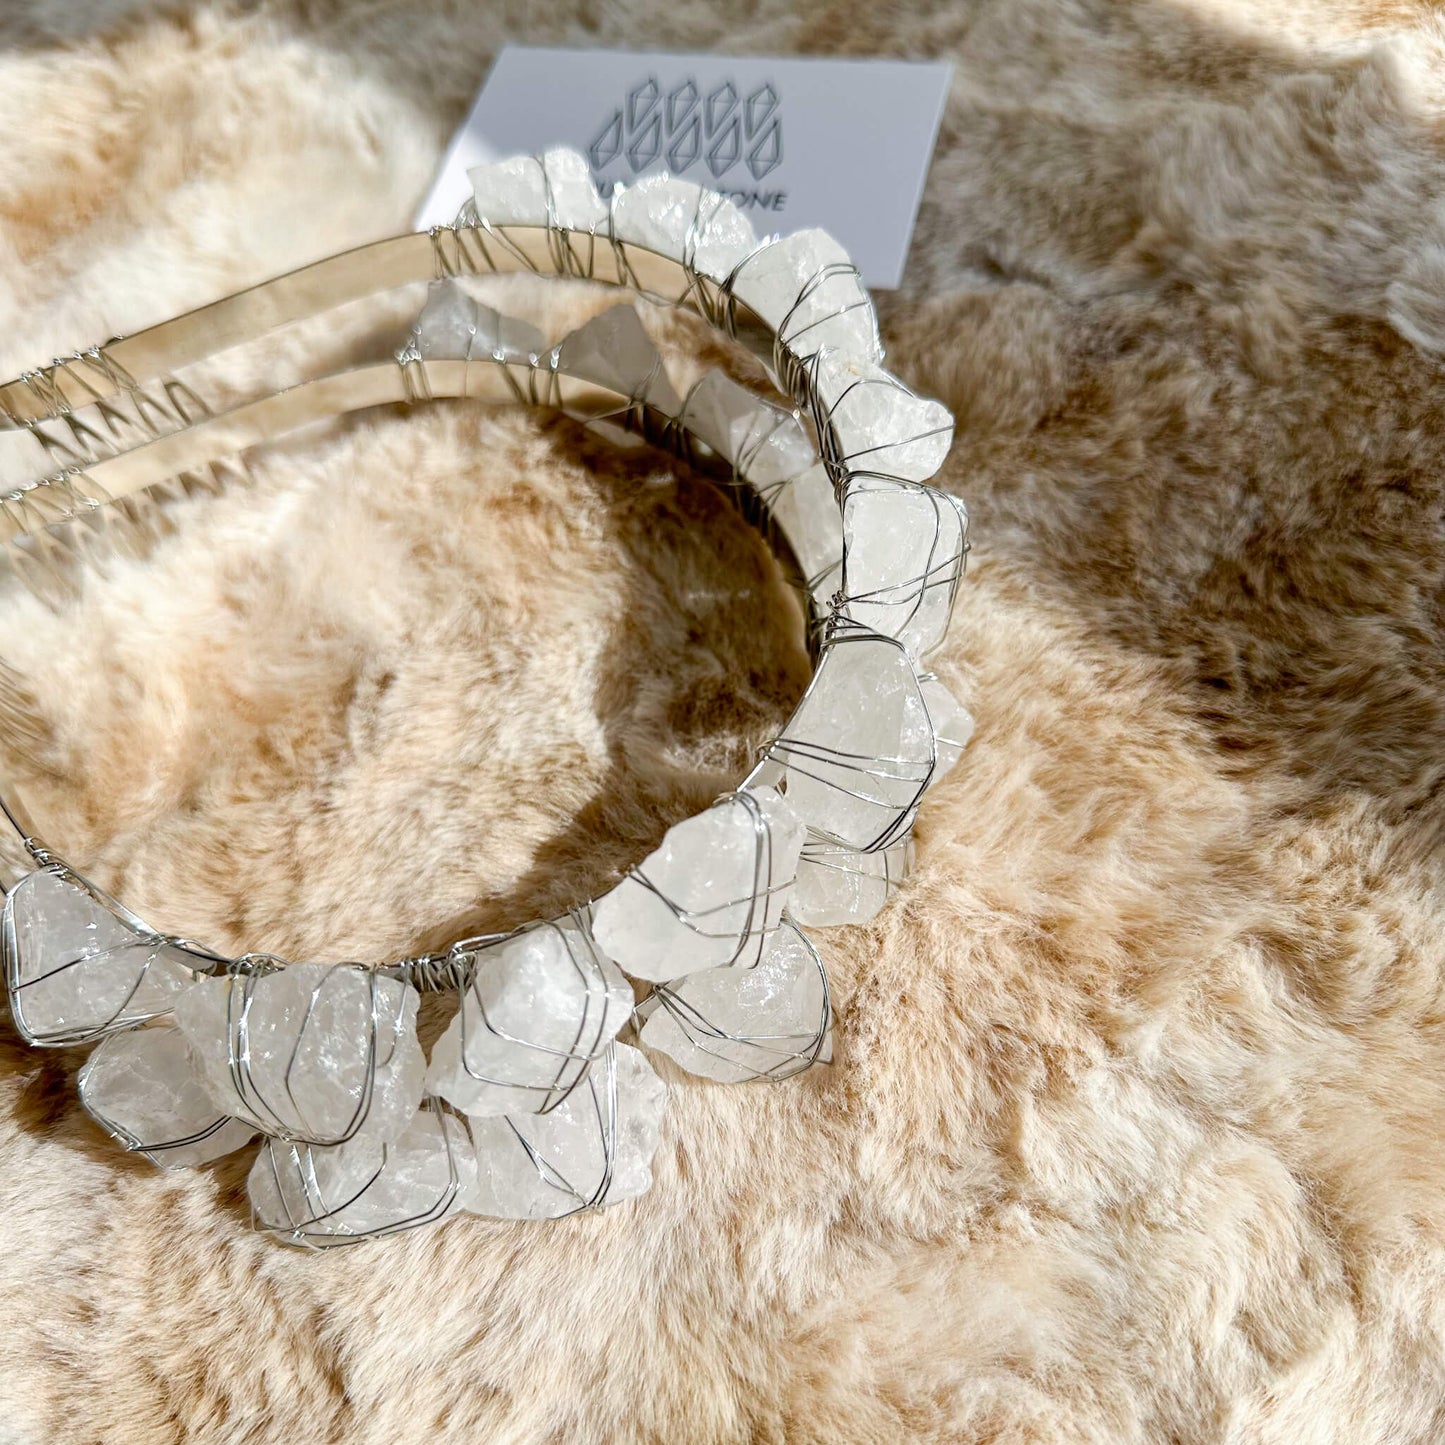 Raw Clear Quartz Crystal Crown/Rough Citrine Tiara Healing Comb Crown/Wedding Bride Jewelry Headband/Wire Wrapped